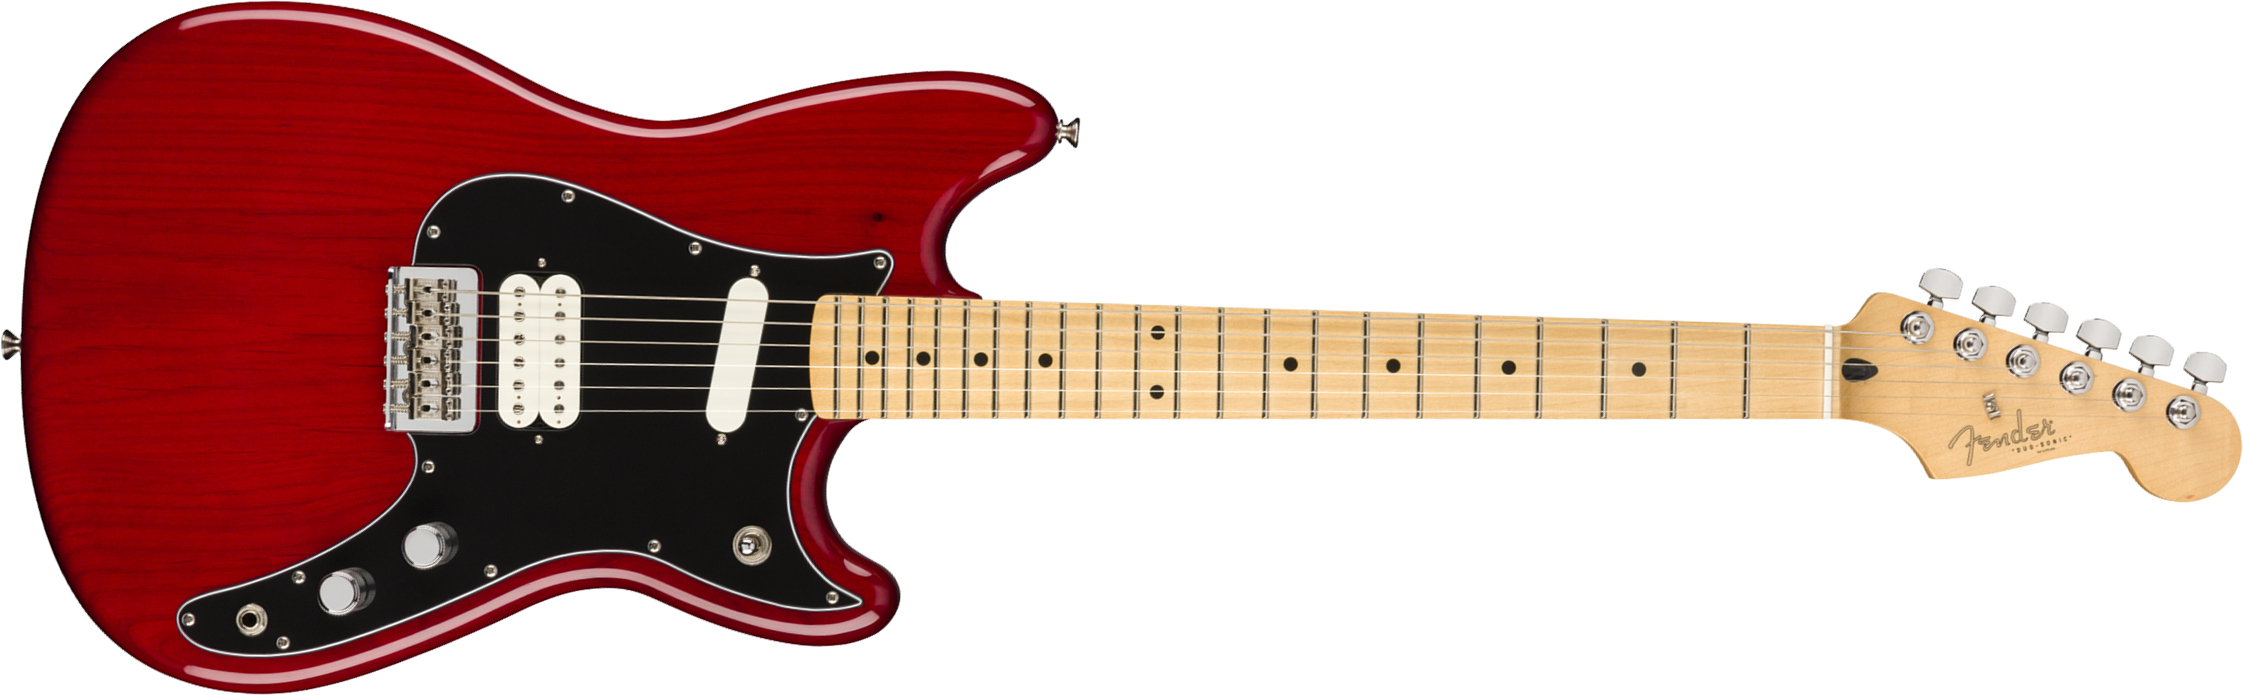 Fender Duo-sonic Player Hs Ht Mn - Crimson Red Transparent - Retro-rock elektrische gitaar - Main picture